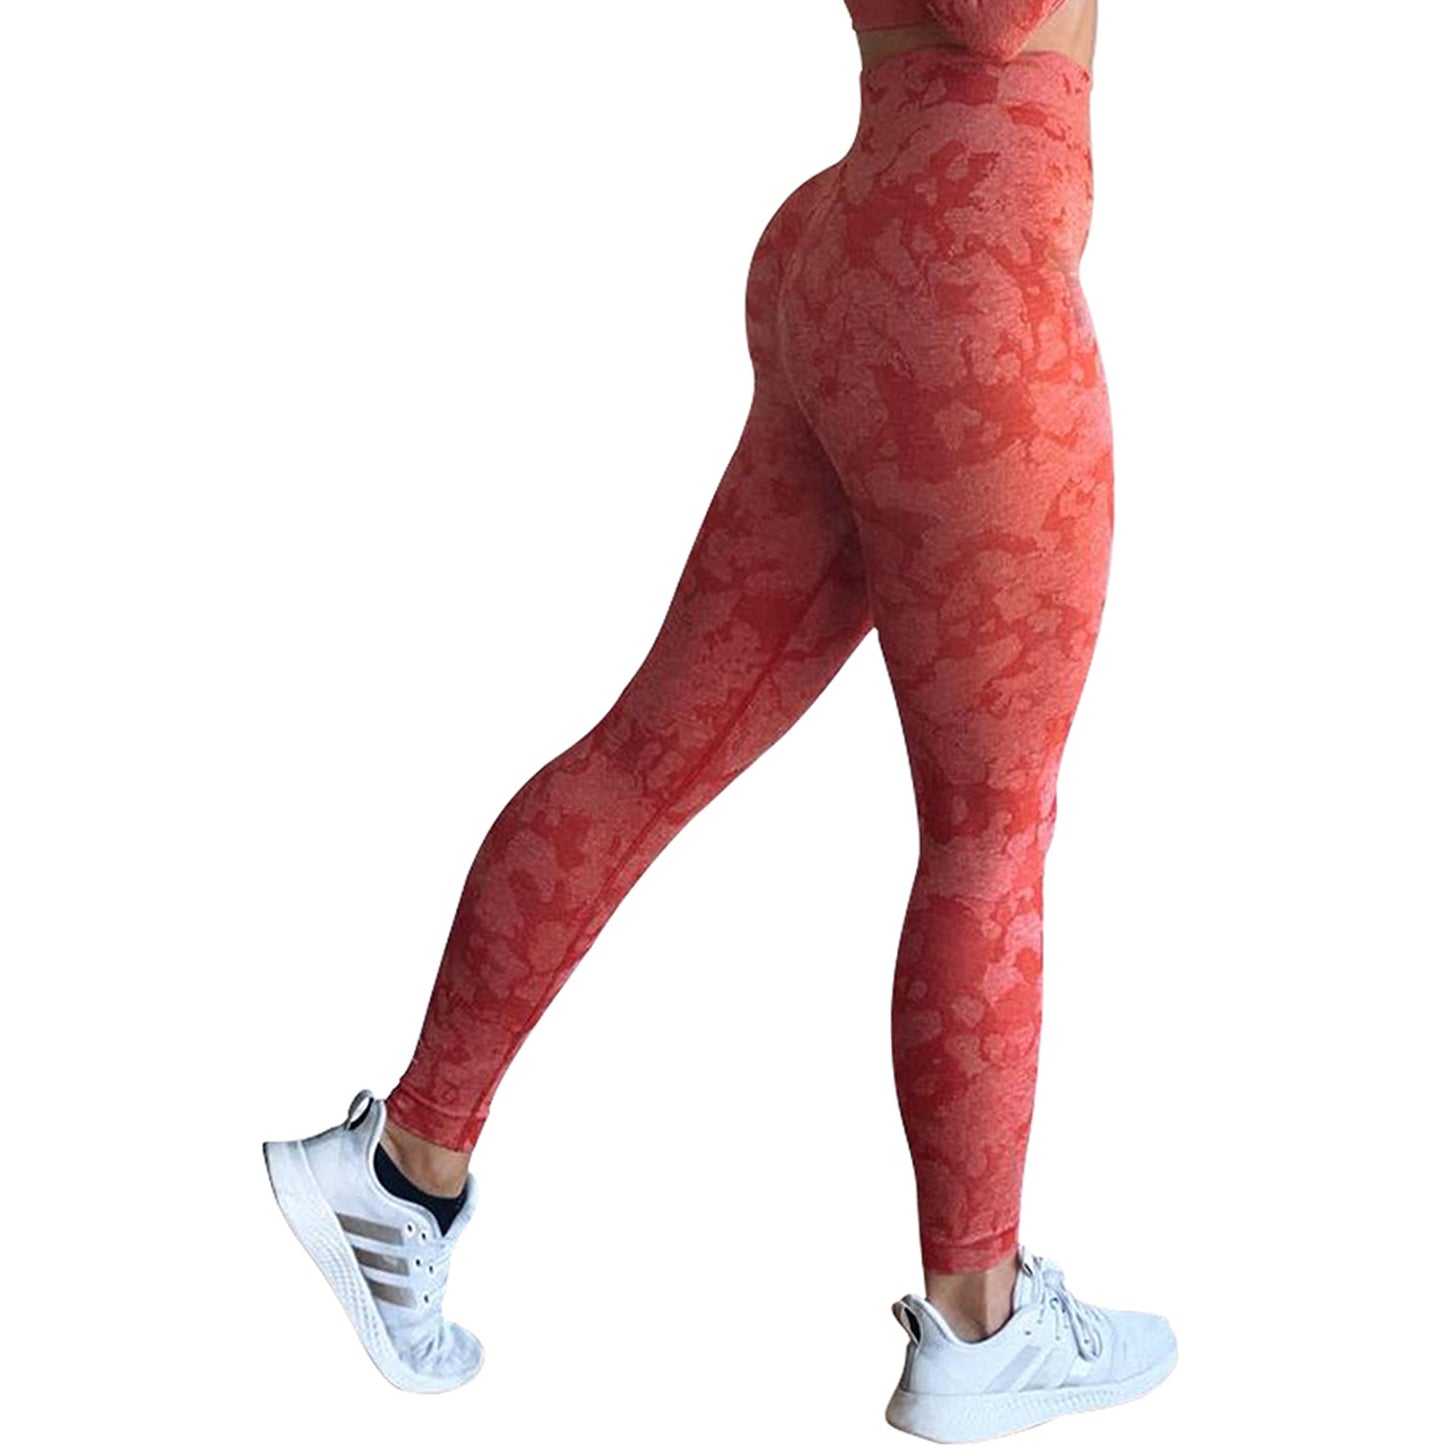 Red Camo Leggings  Fitness Yoga Pants